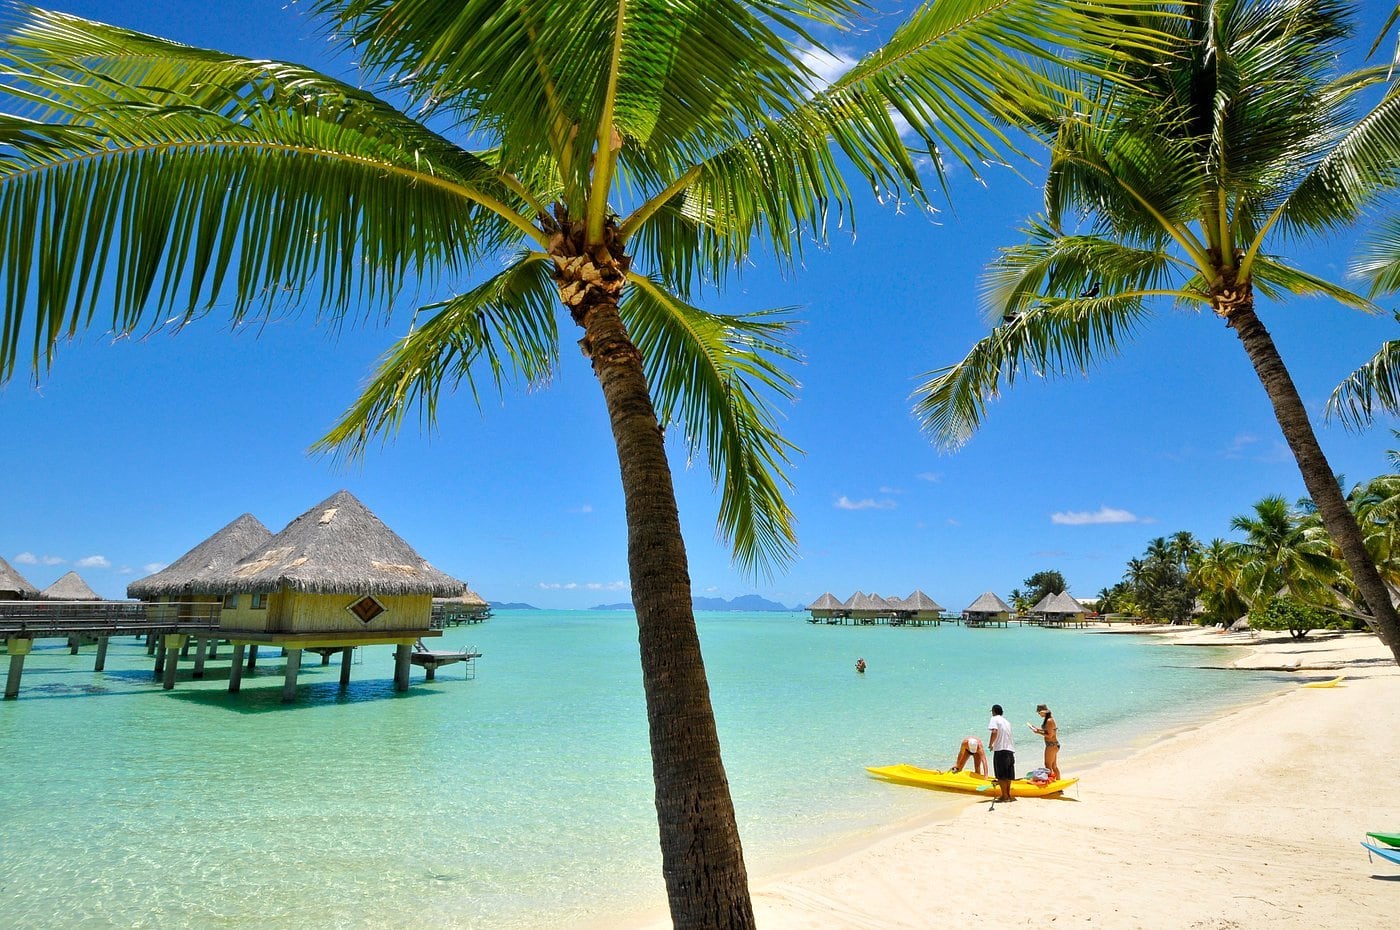 Bora Bora overwater bungalows and palm fringed beach